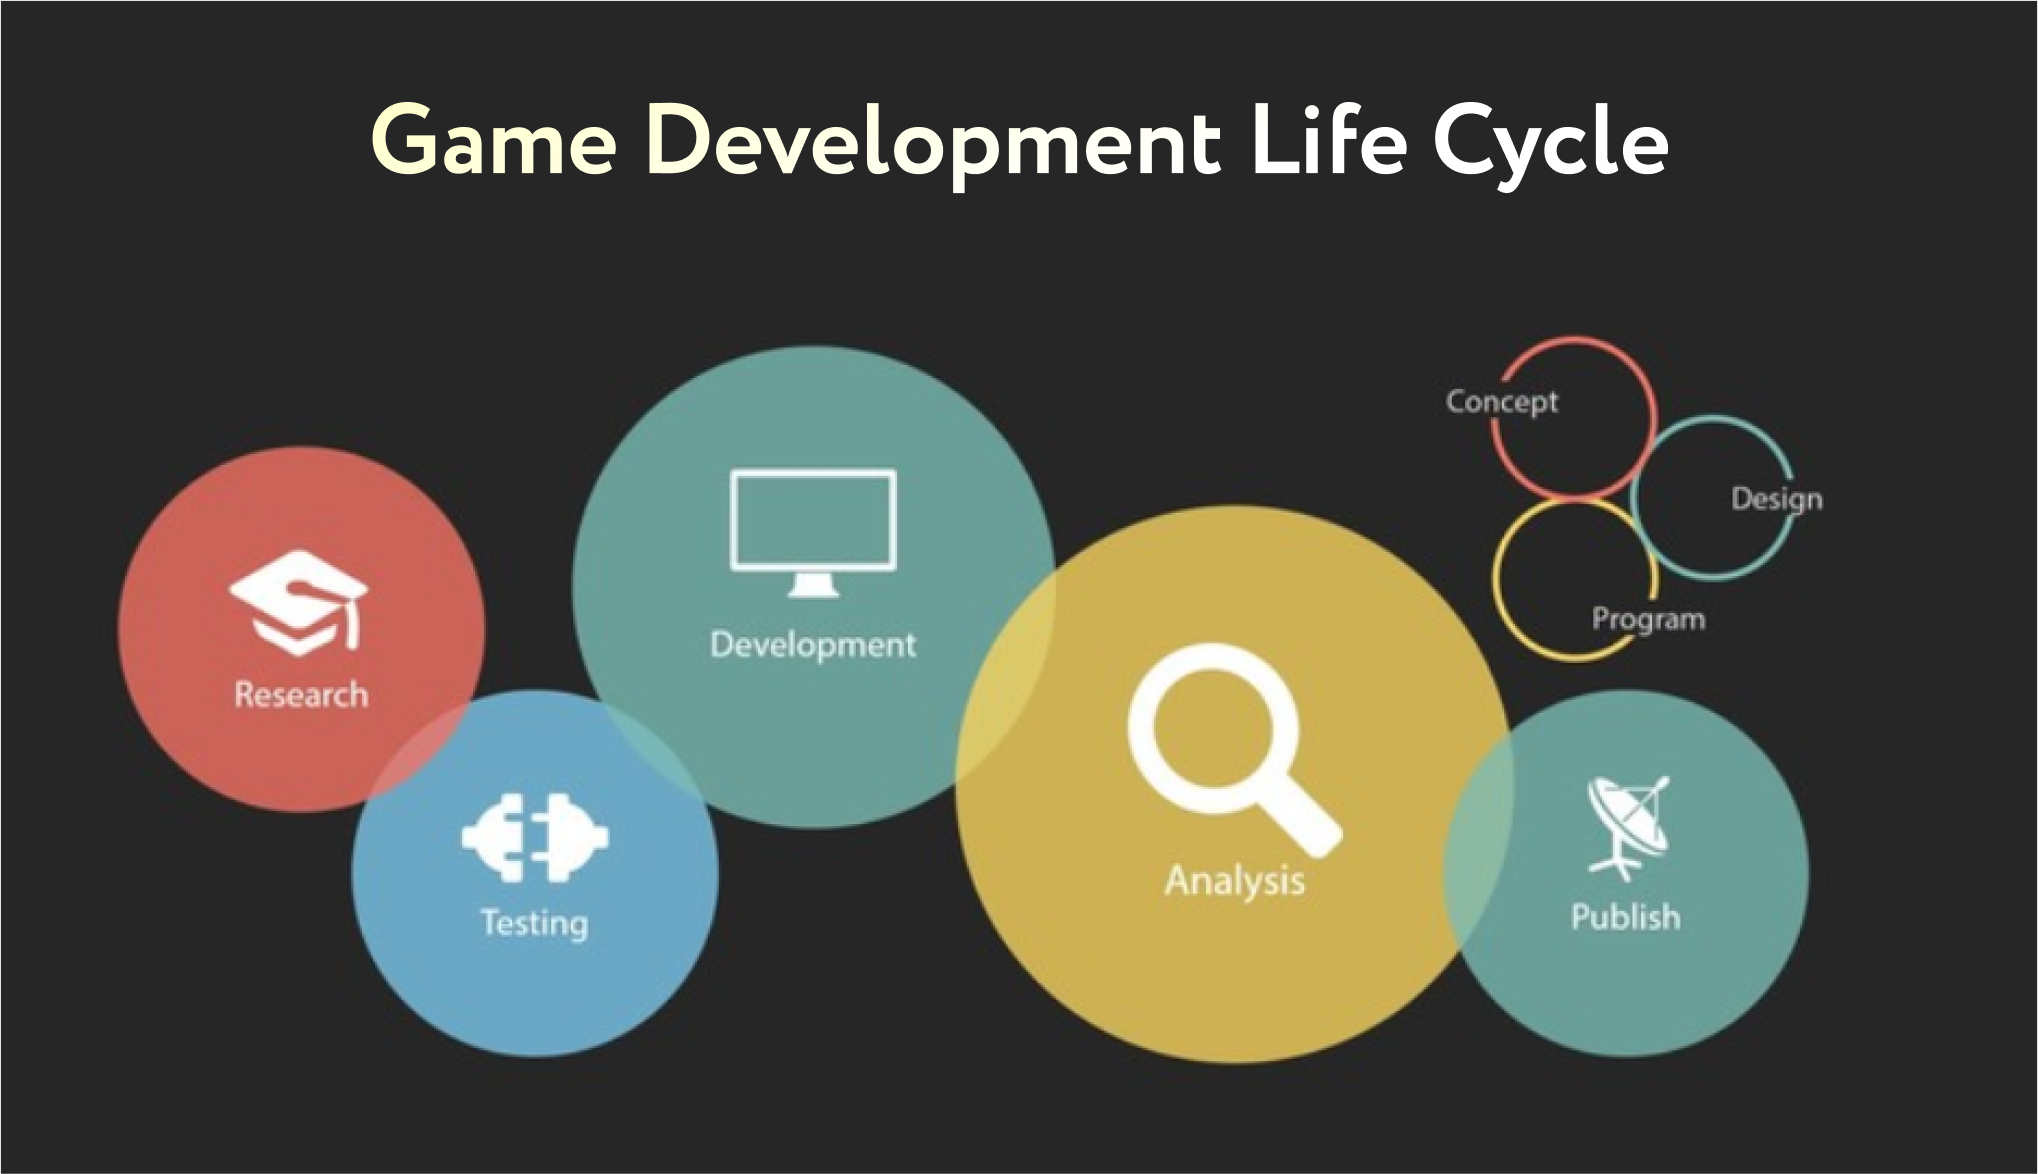 The game was developed. Development игра. Game Development Cycle. Разработка компьютерных игр. Game developer игра.